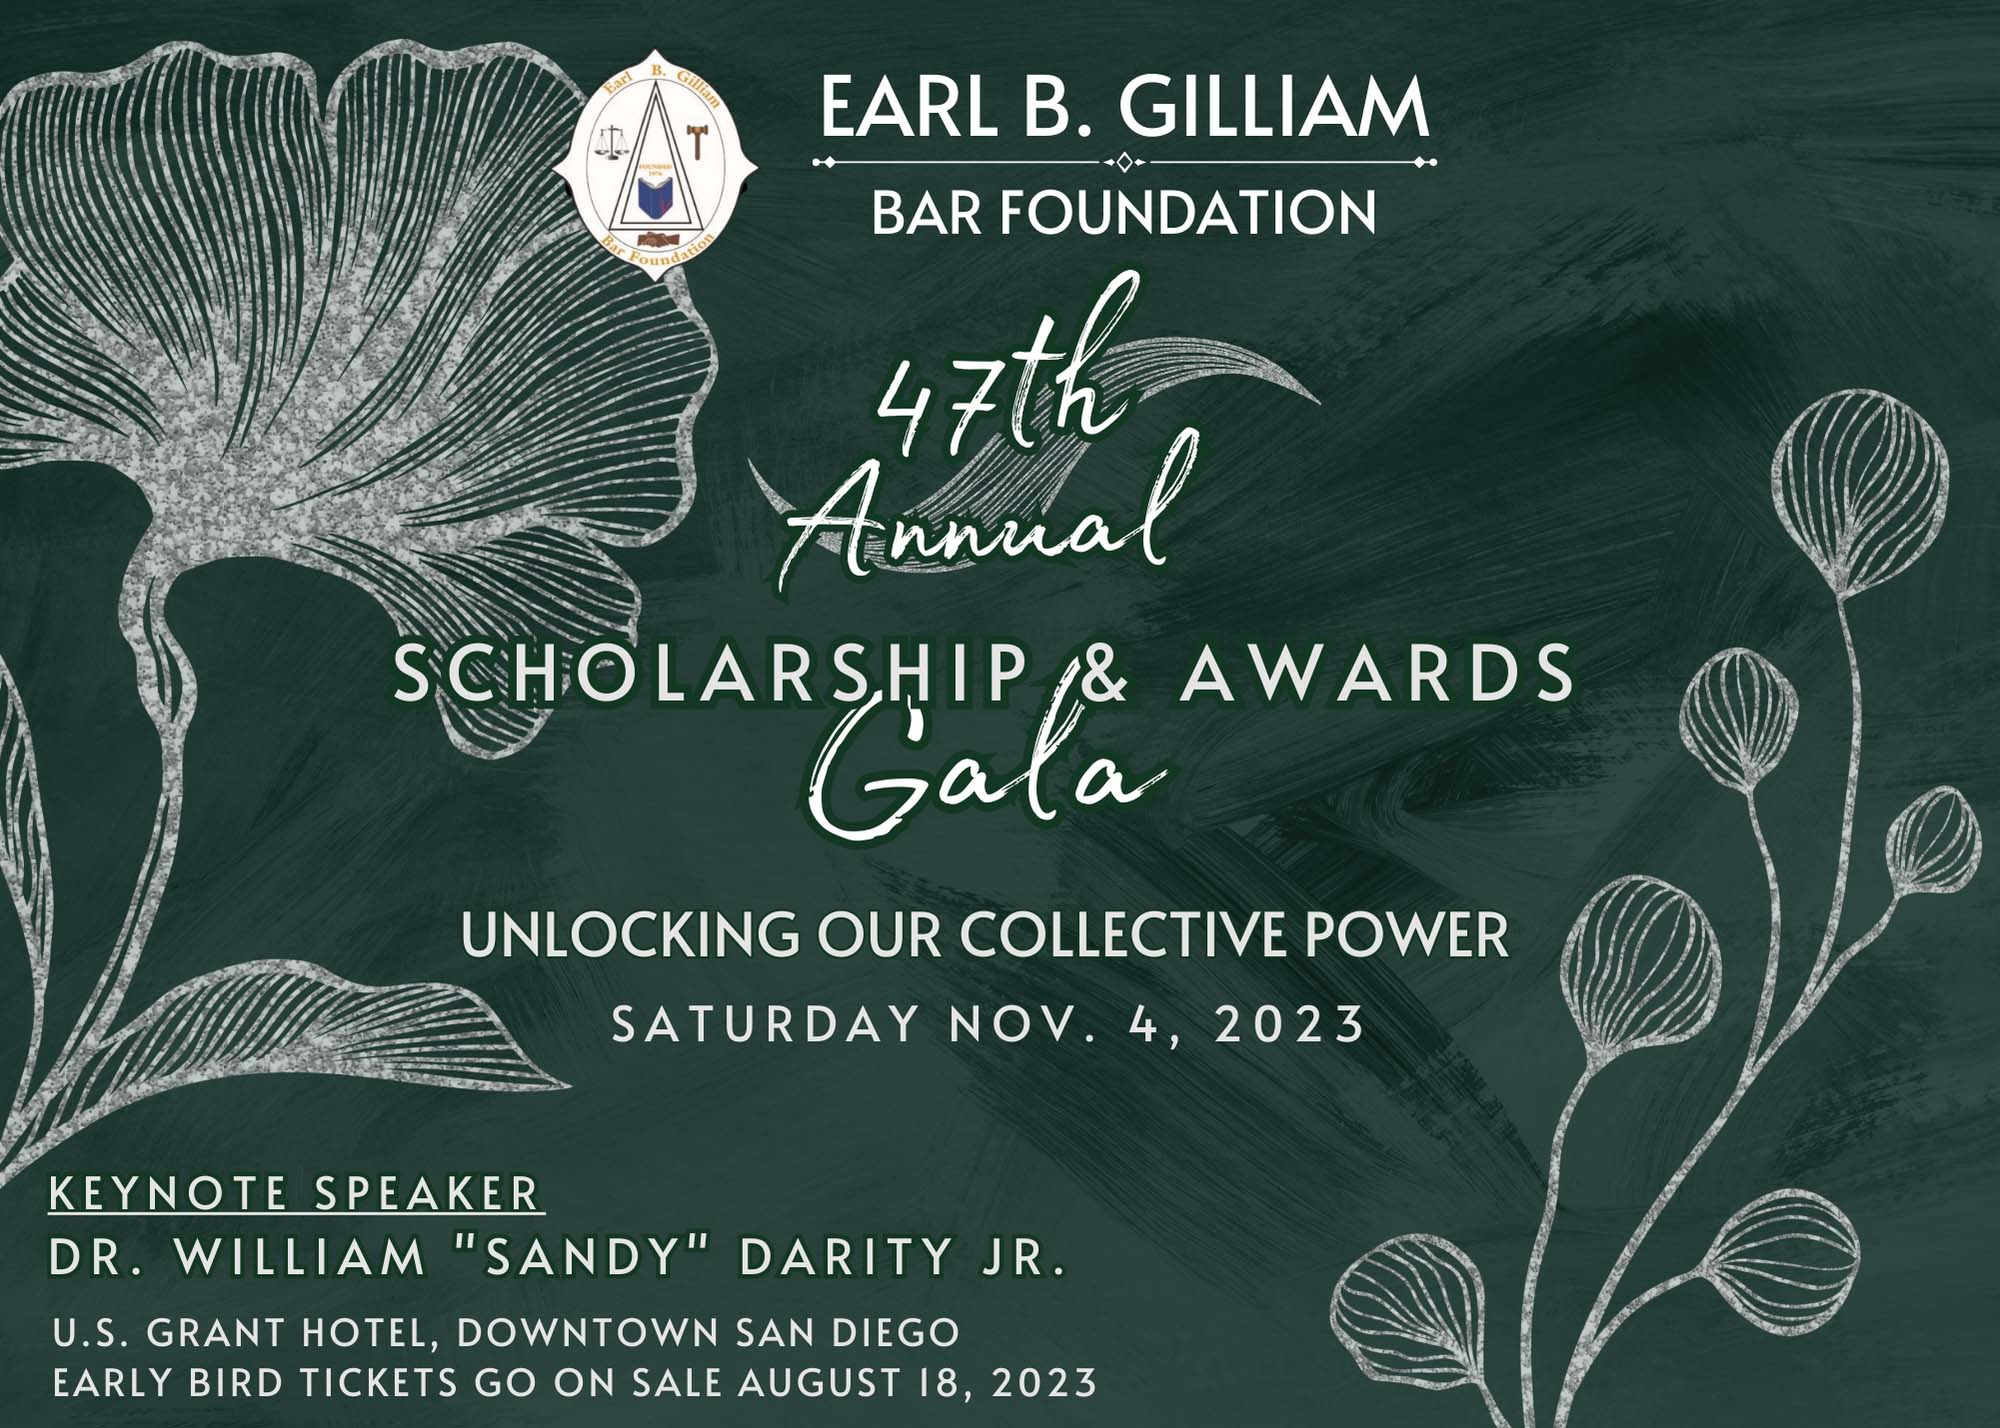 47th Annual Scholarship & Awards Gala